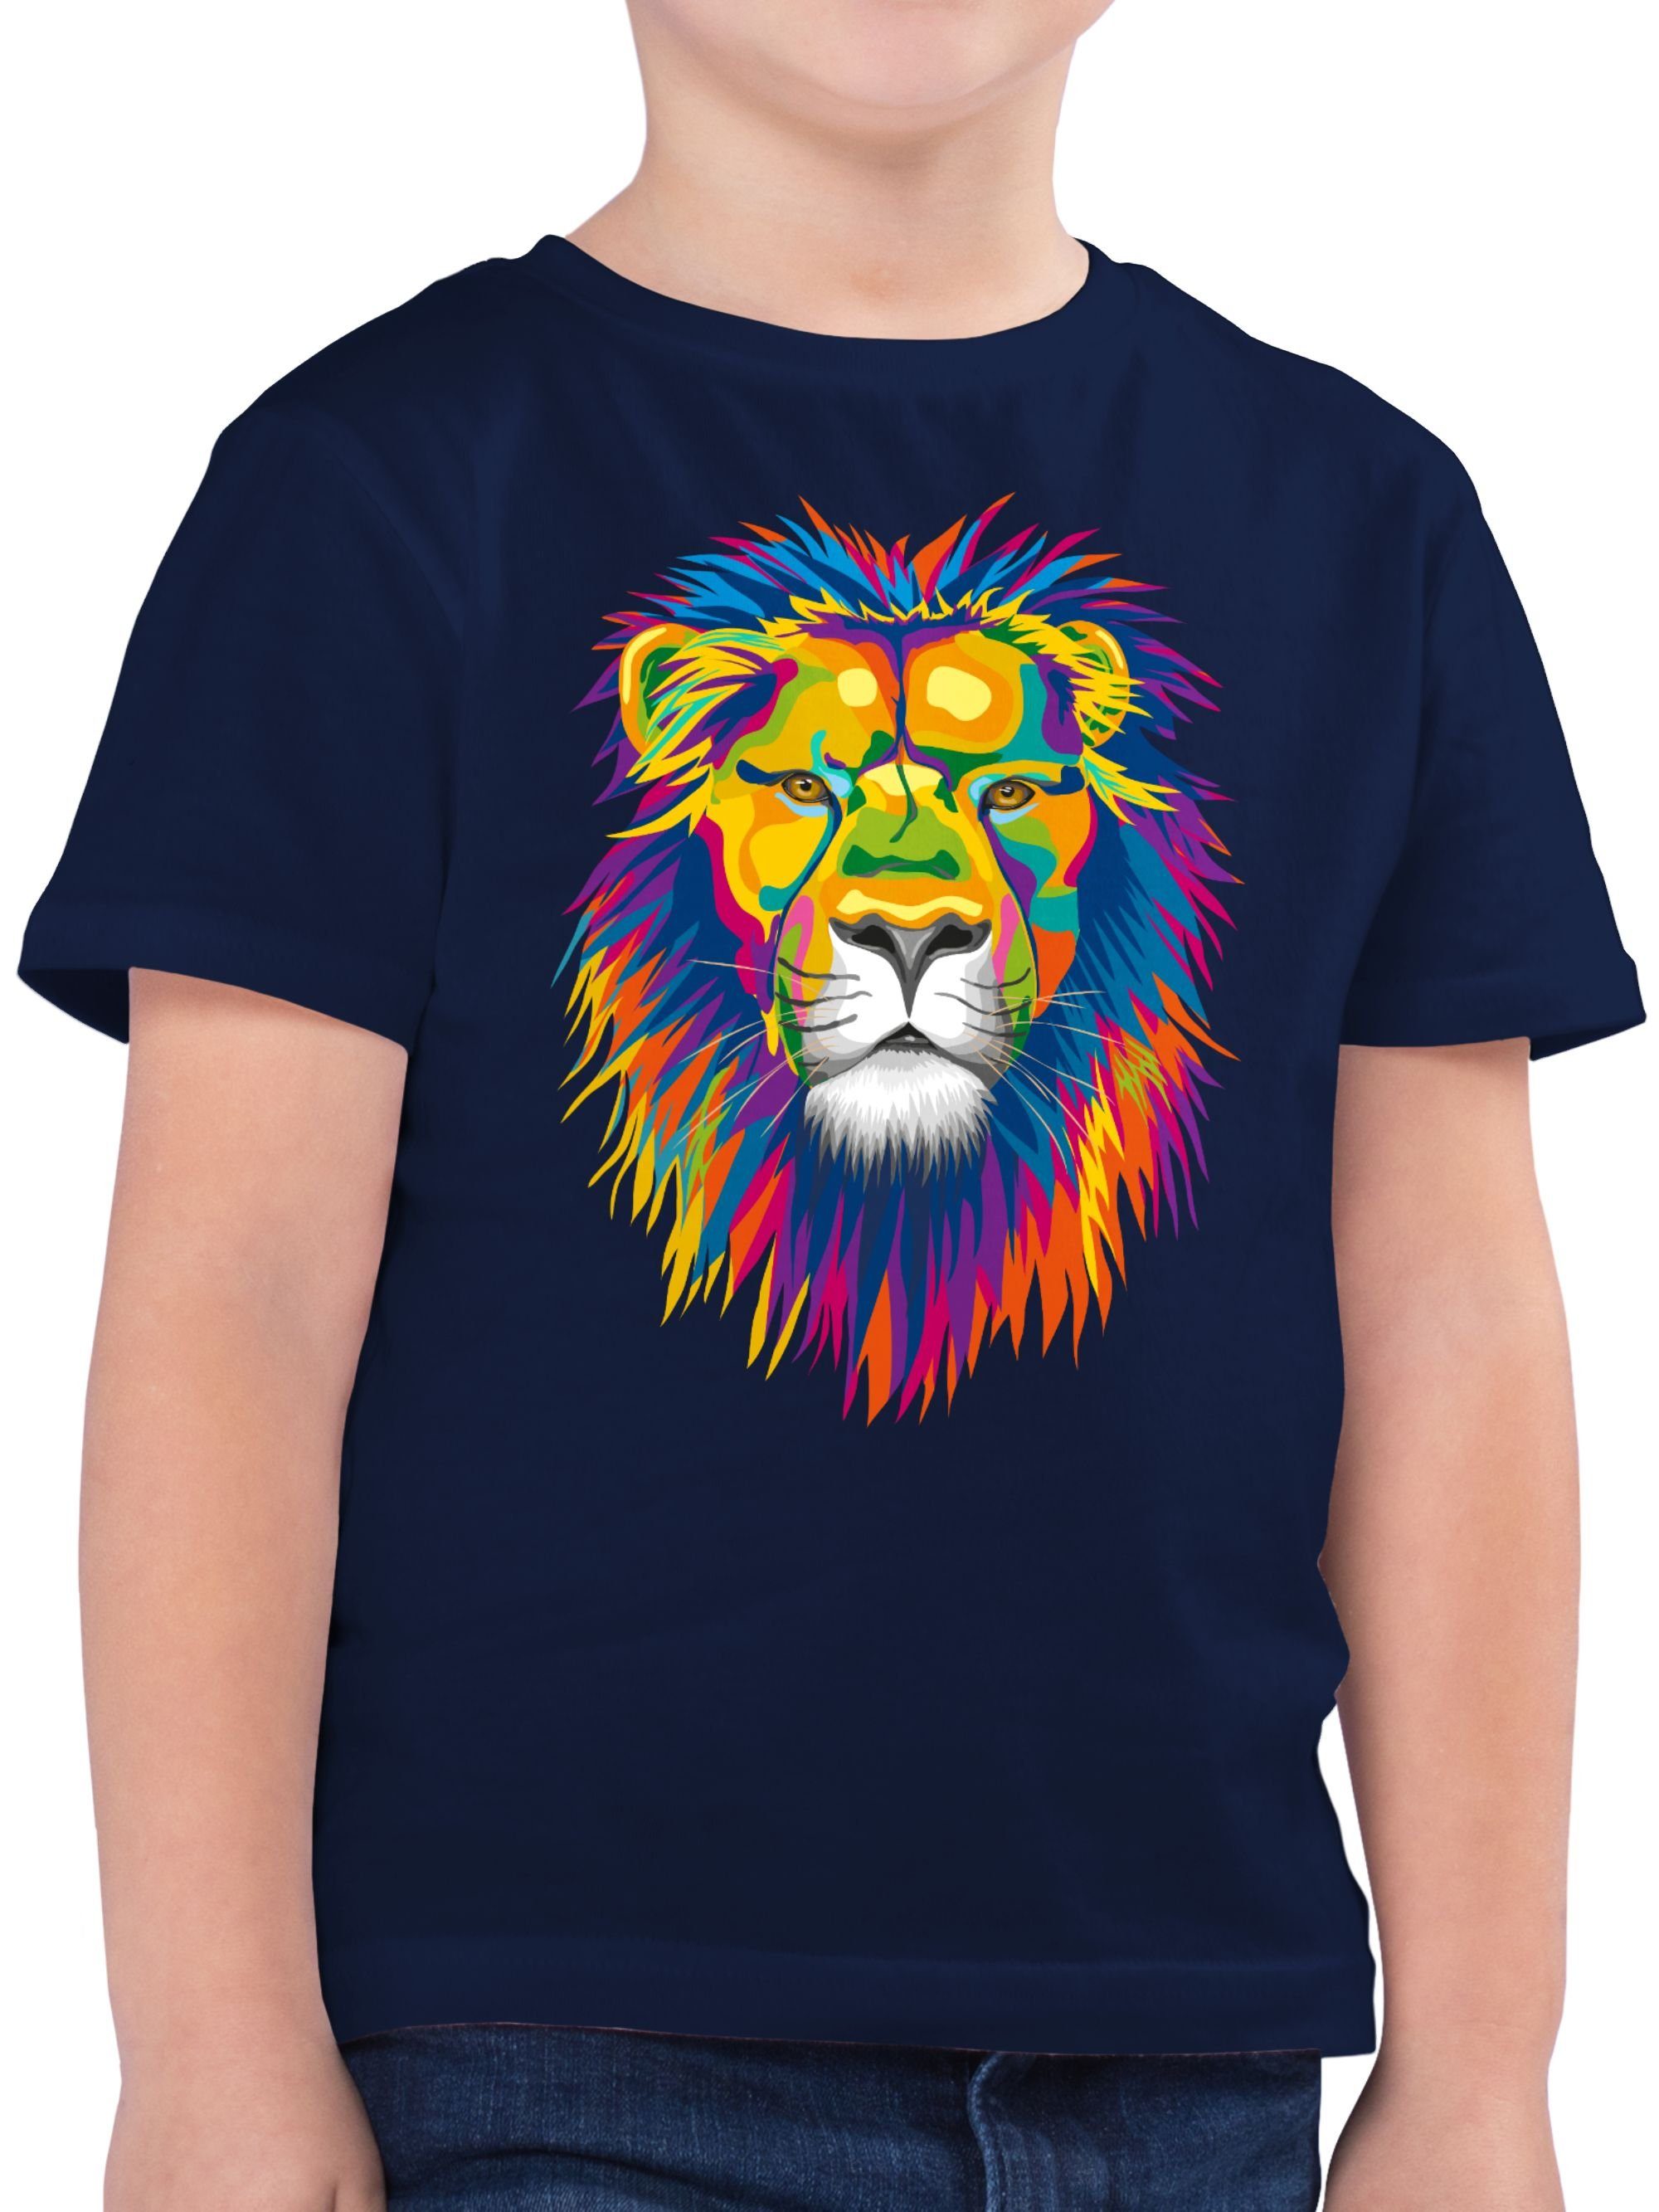 Shirtracer T-Shirt Löwe - bunt - Tiermotiv Animal Print - Jungen Kinder T- Shirt bunt tshirt jungen - löwe